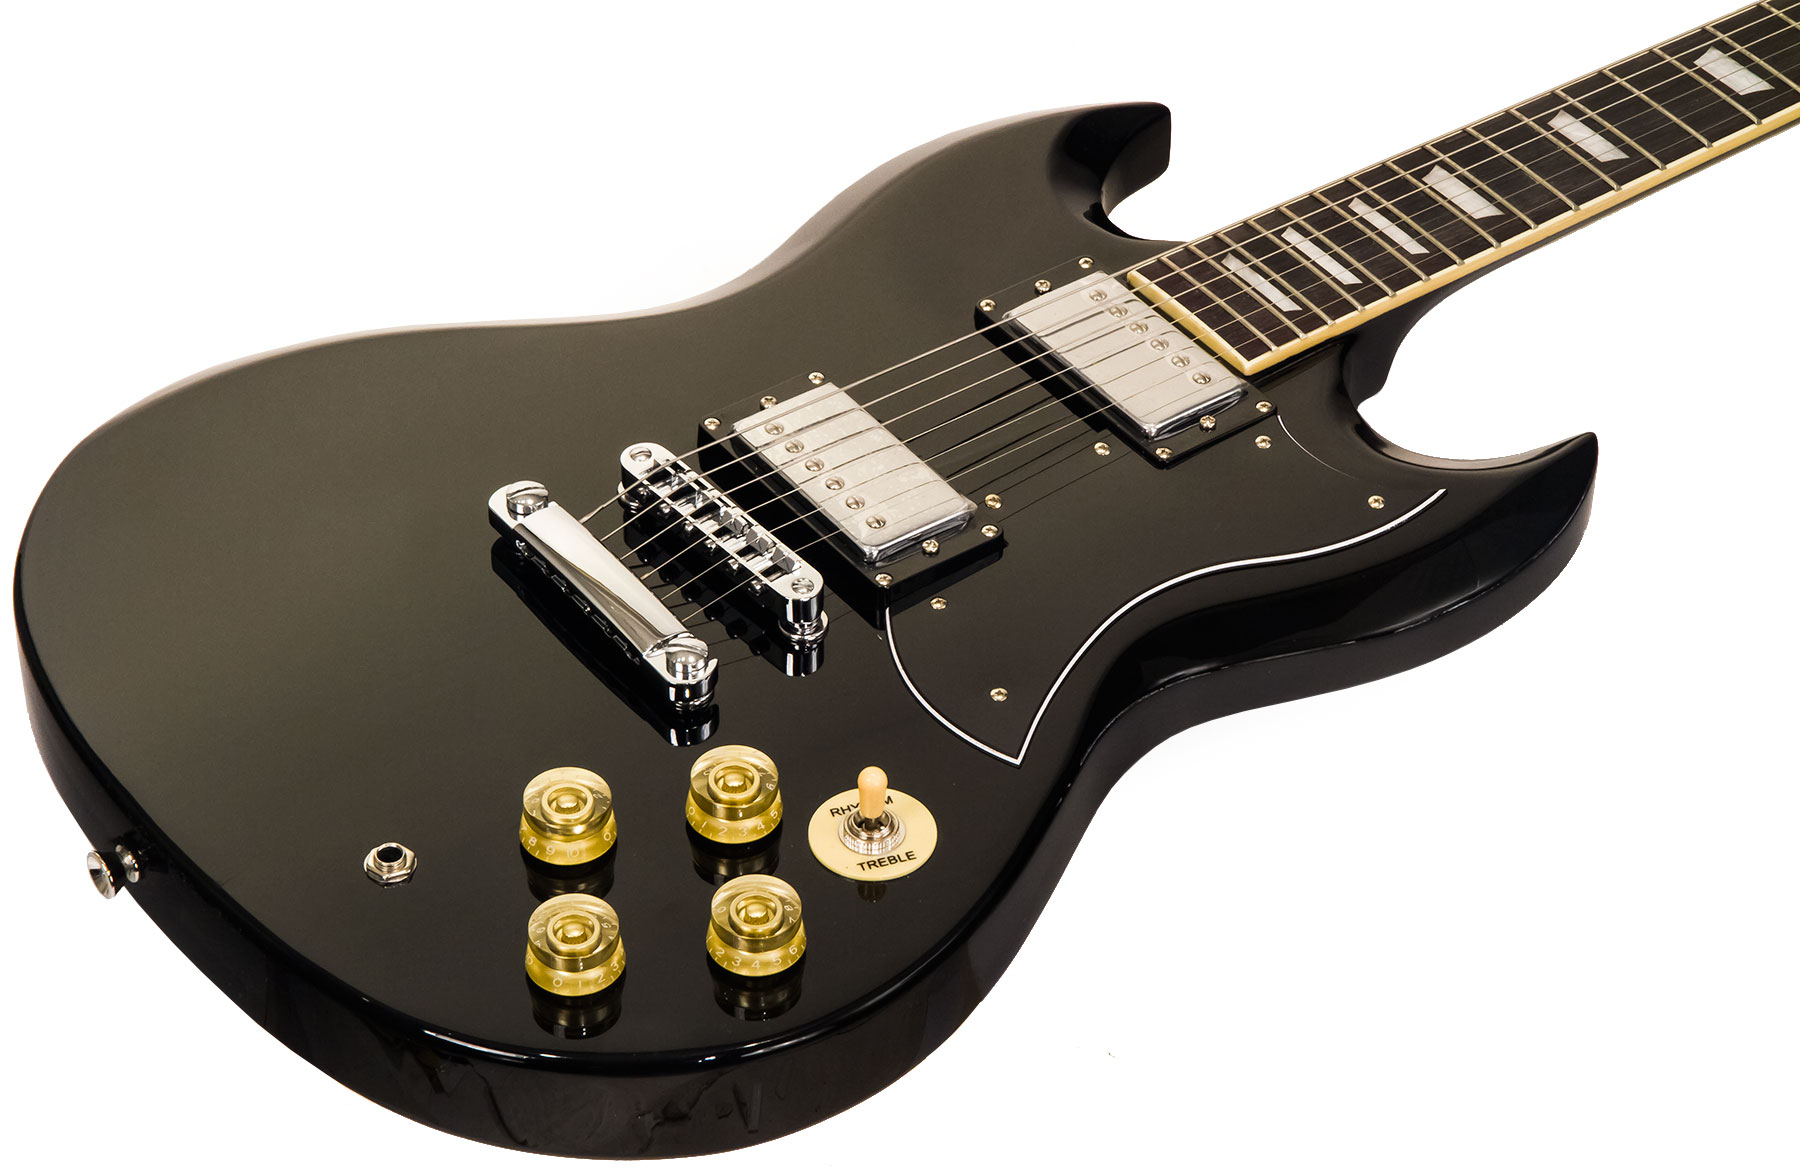 Eastone Sdc70 Hh Ht Pur - Black - Retro-rock elektrische gitaar - Variation 1